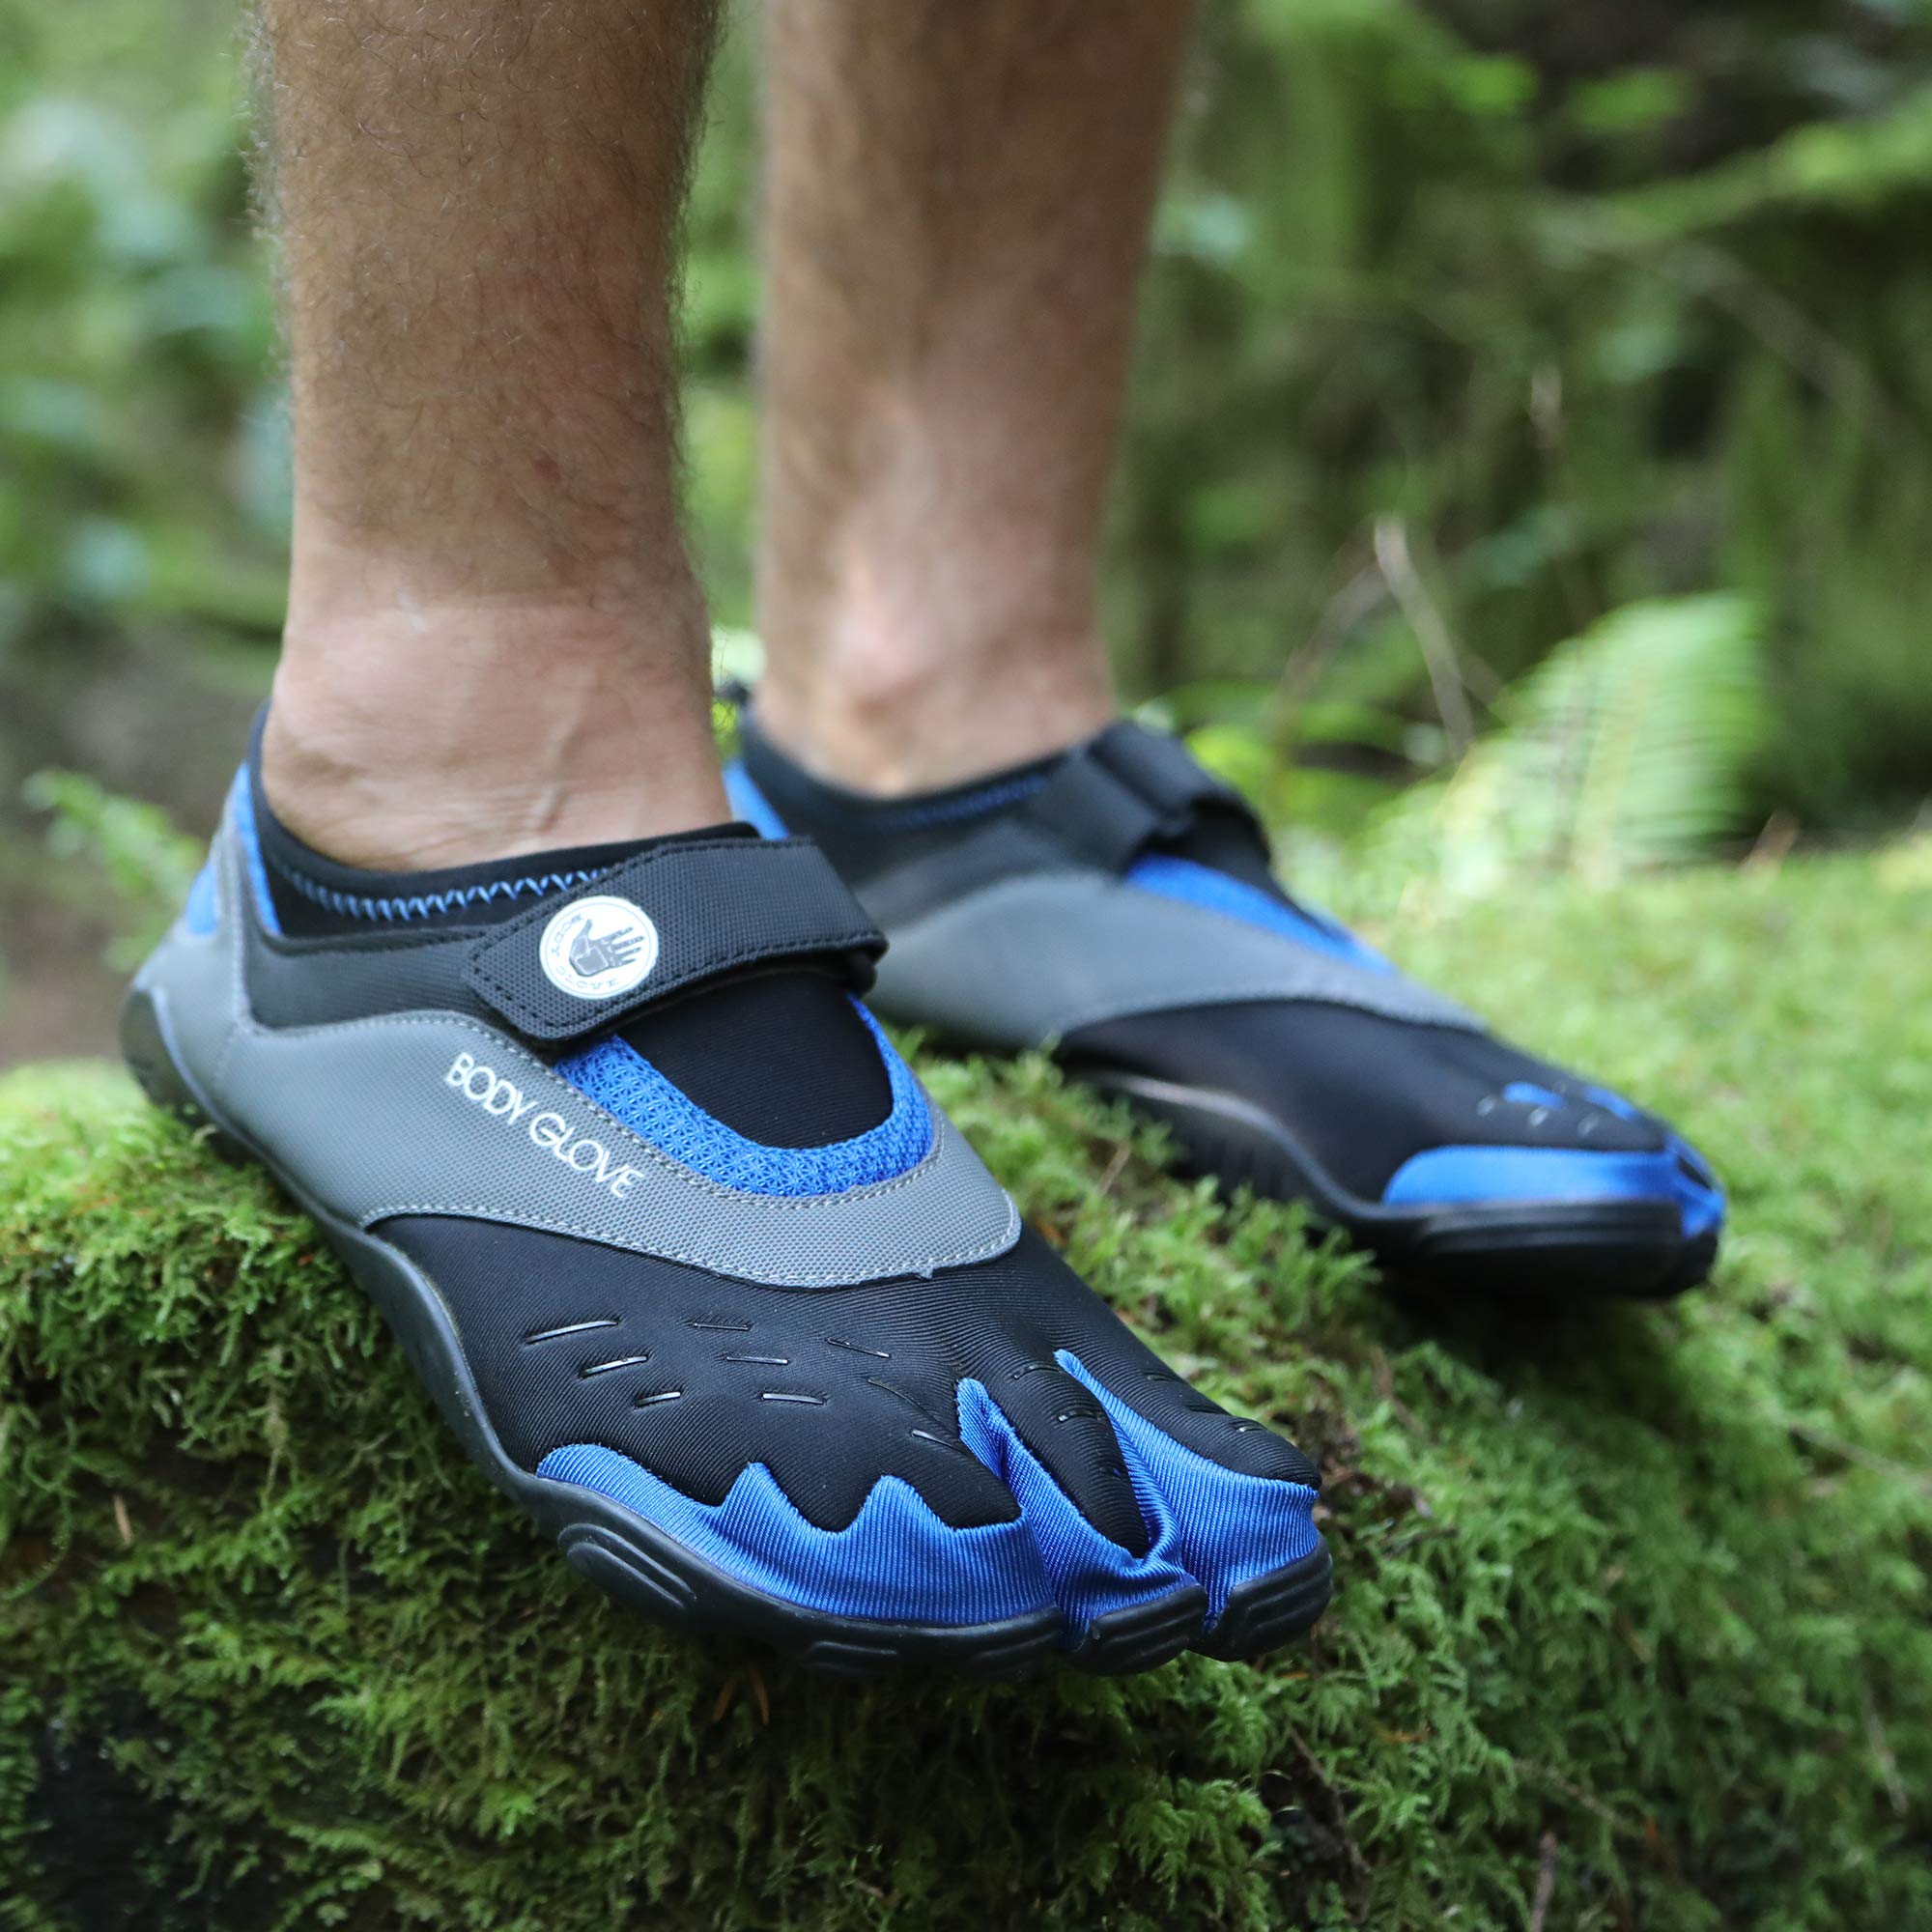 Body Glove Men's 3t Barefoot Max Water Shoe